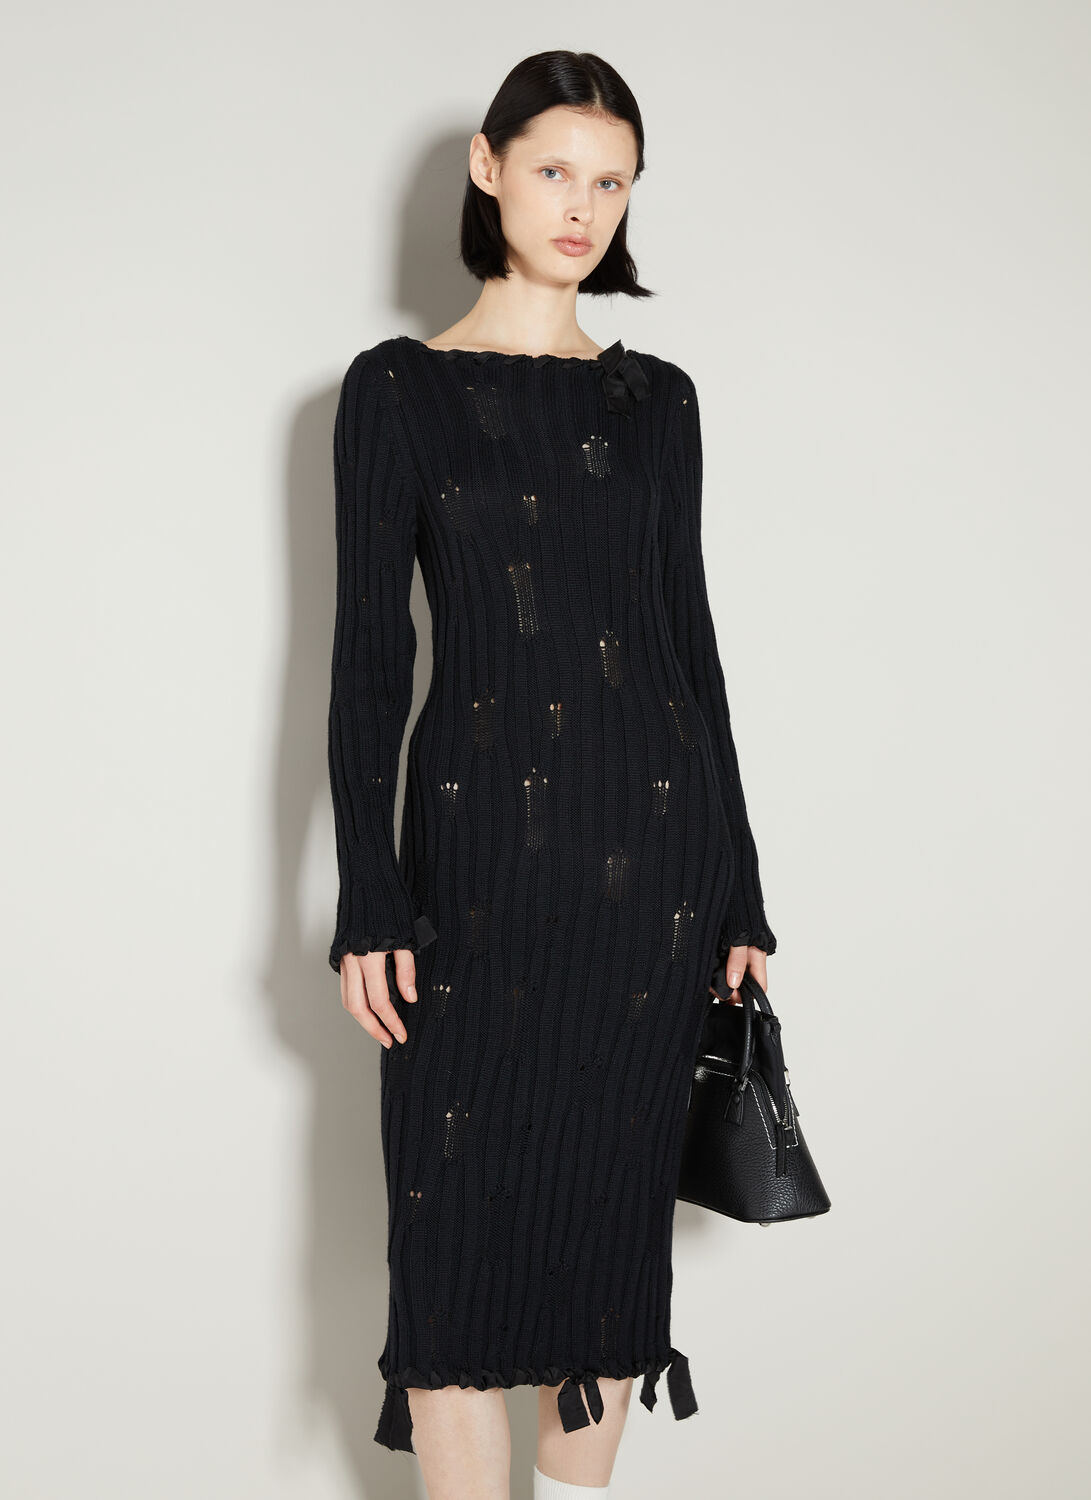 Mm6 Maison Margiela Distressed Knit Dress In Black